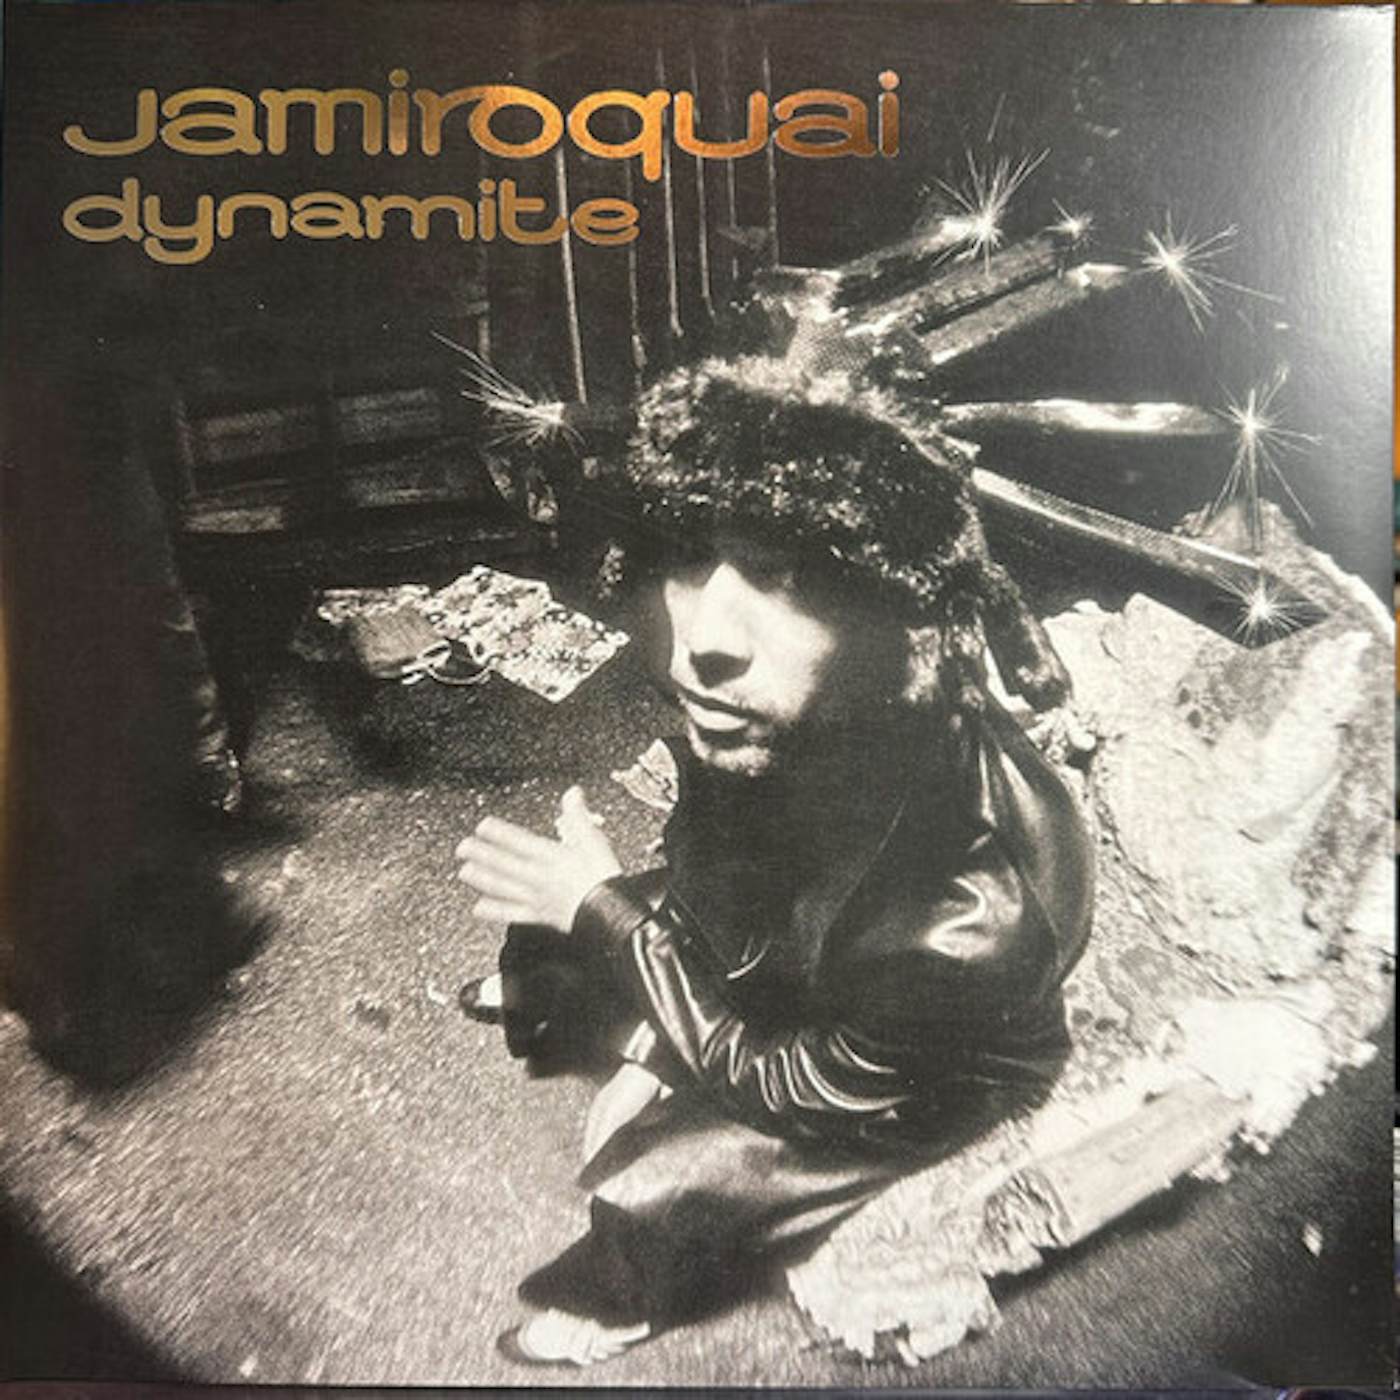 Jamiroquai Dynamite (140g, 2LP) Vinyl Record